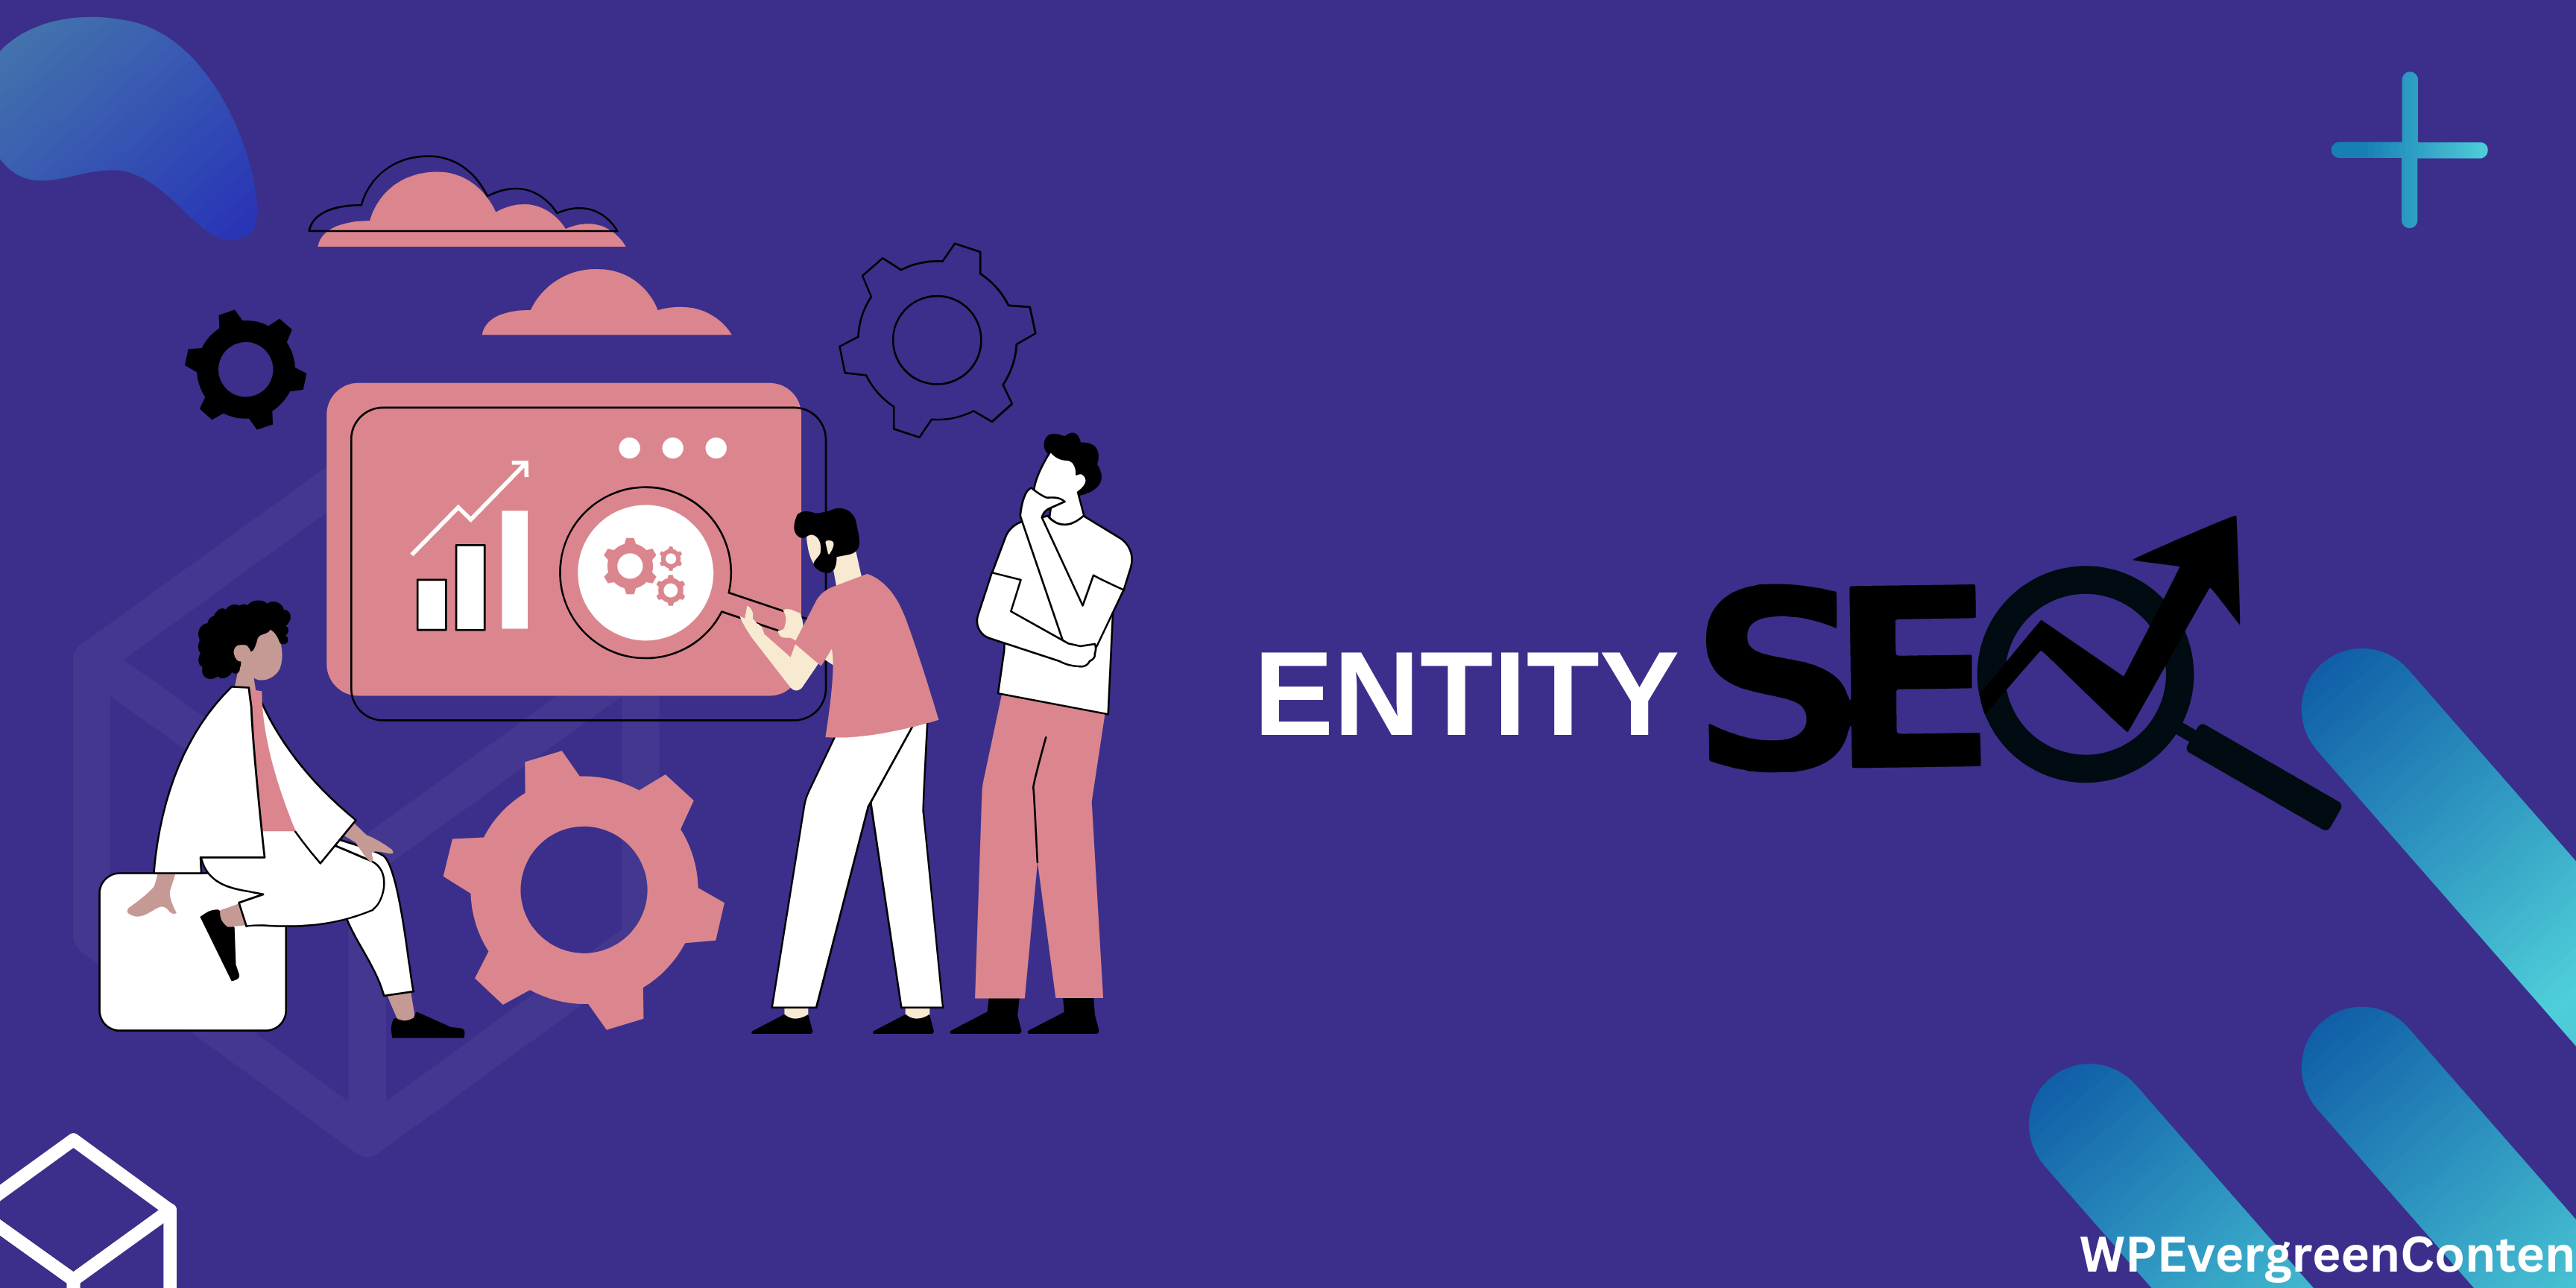 Illustration on Entity SEO